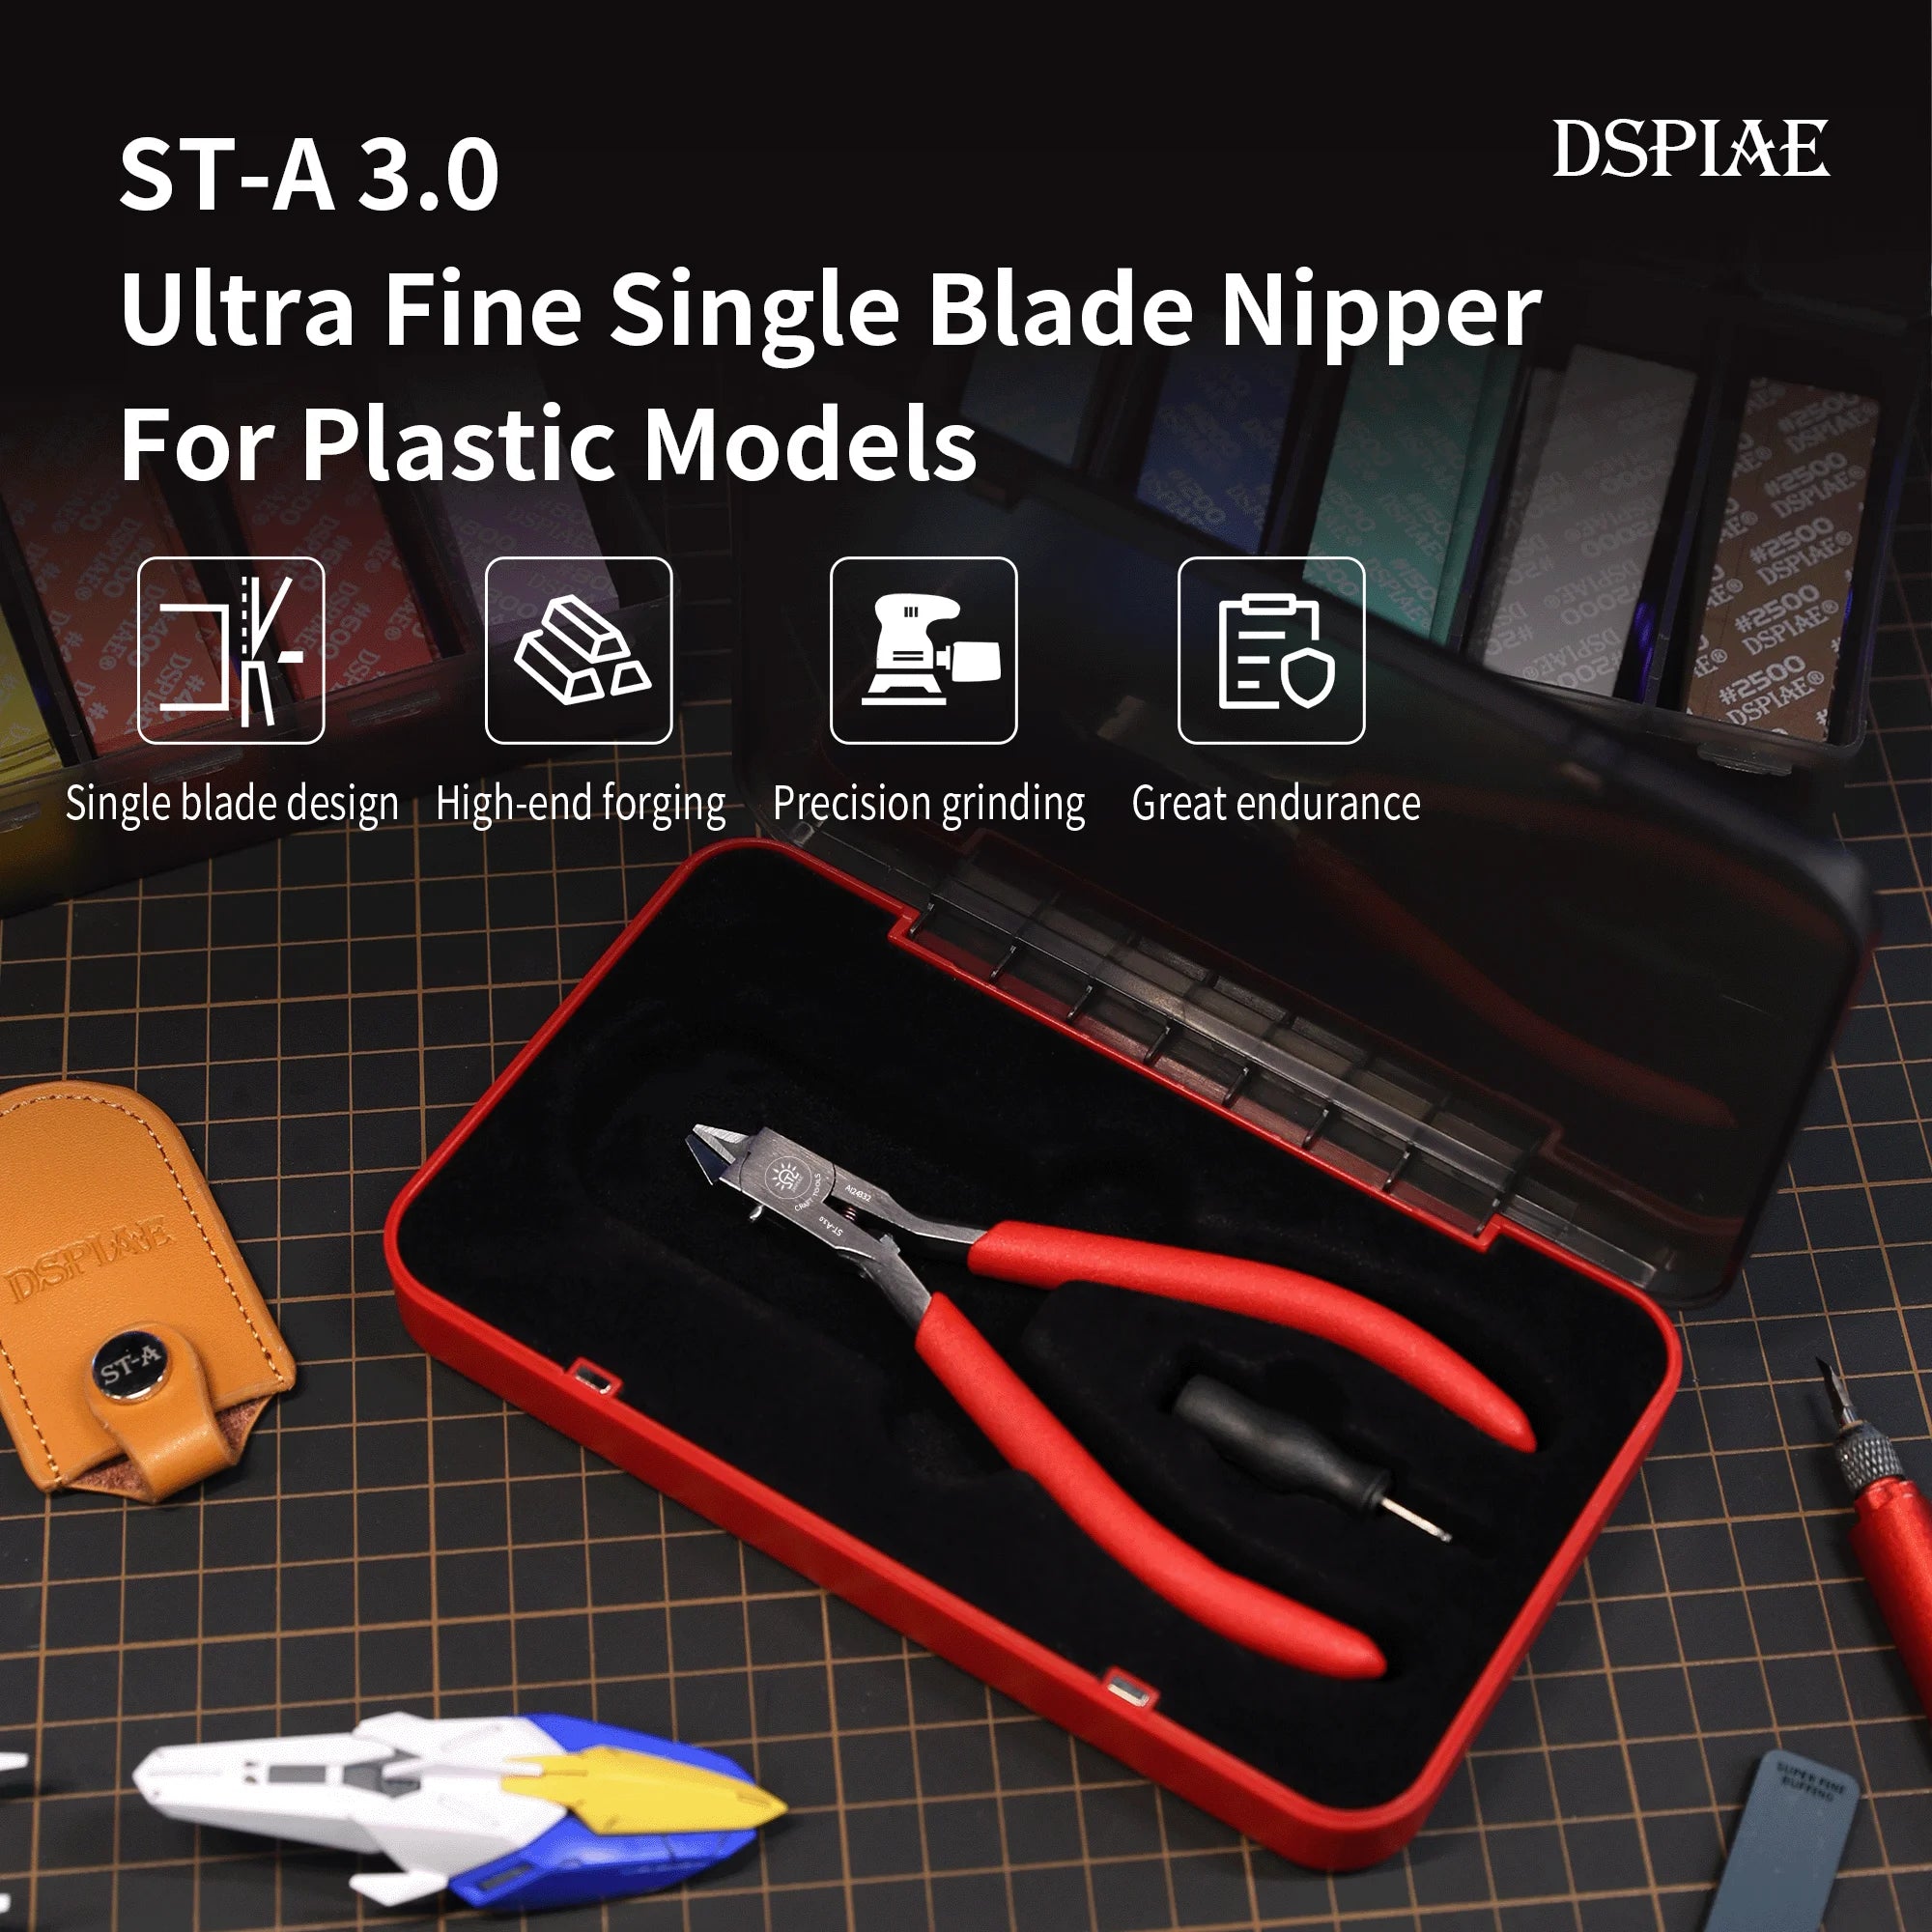 Ultra Fine SIngle Blade Nipper For Plastic Models